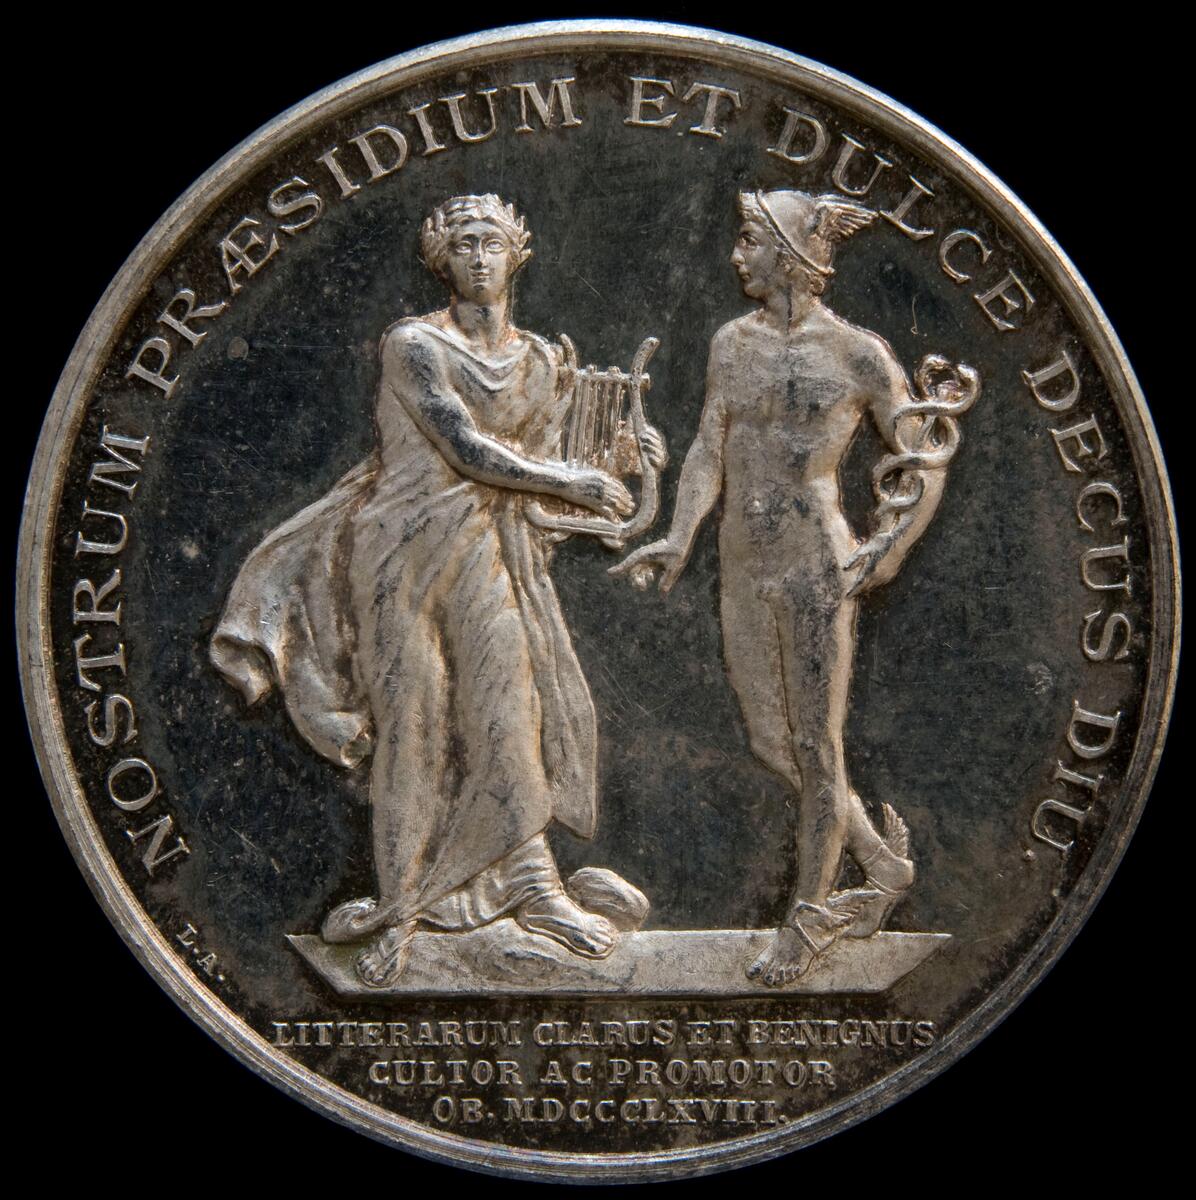 Medalj Bernhard von Beskow, Svenska Akademien, Allmänna Läroverket

